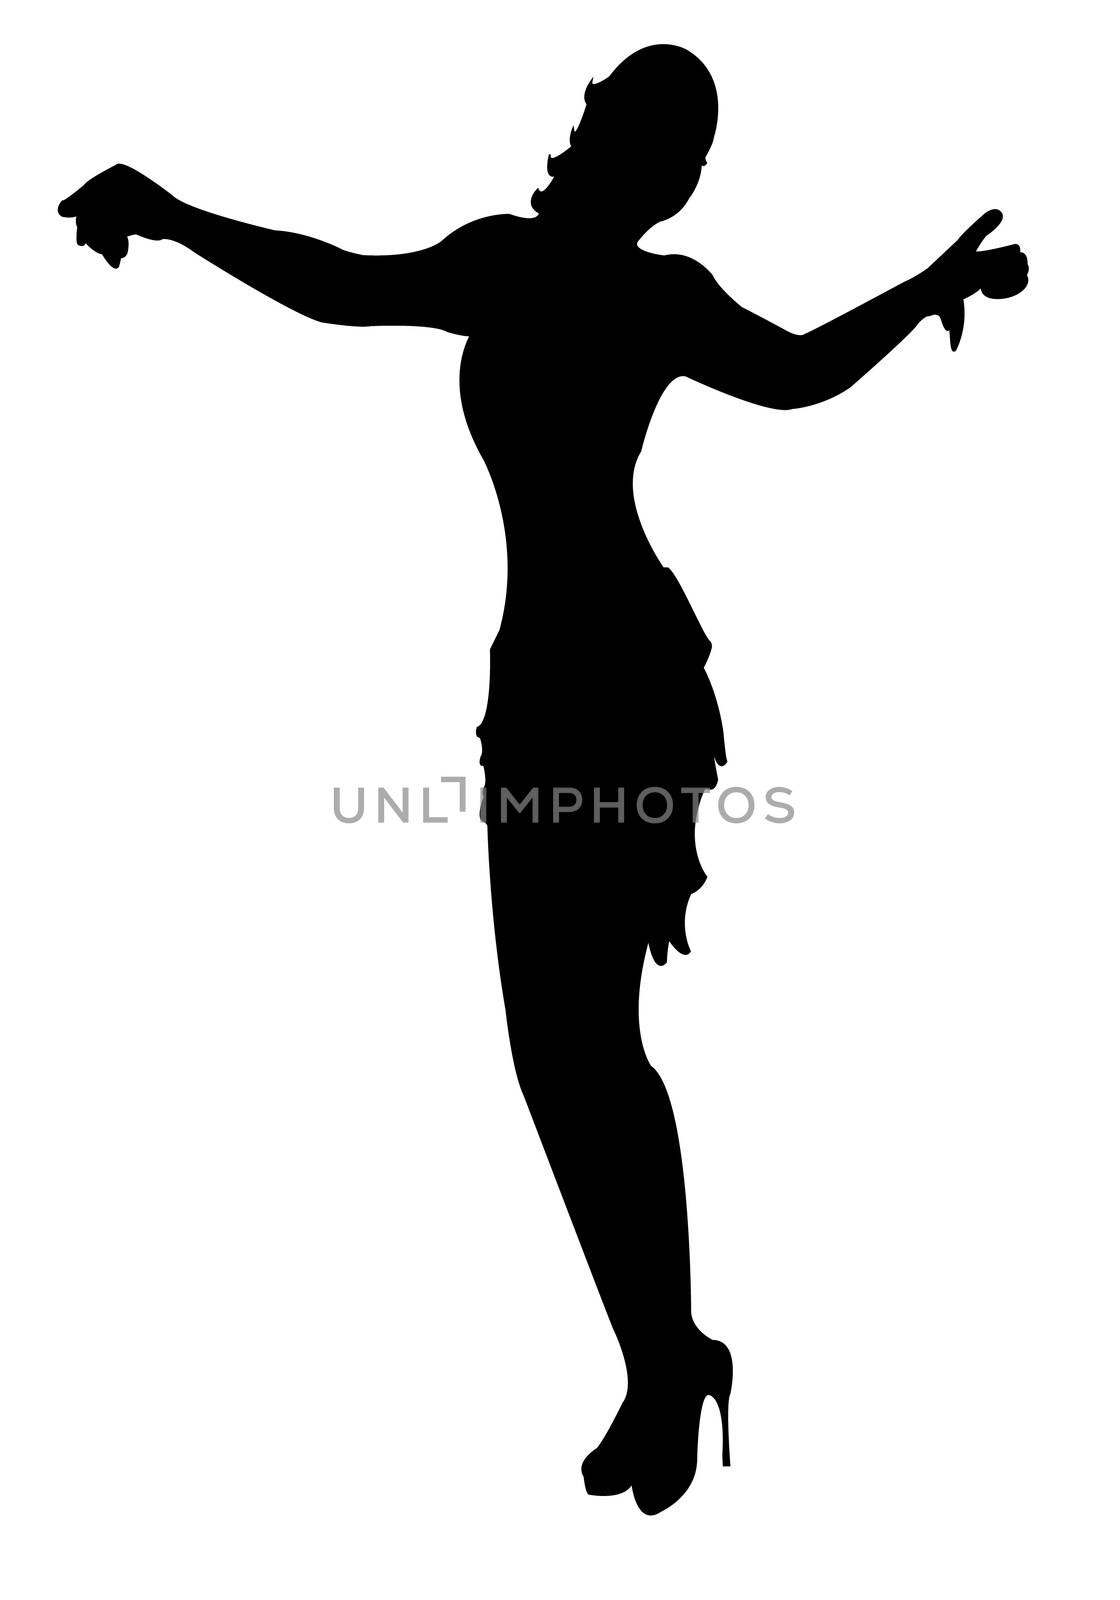 dancing girl silhouette, vector